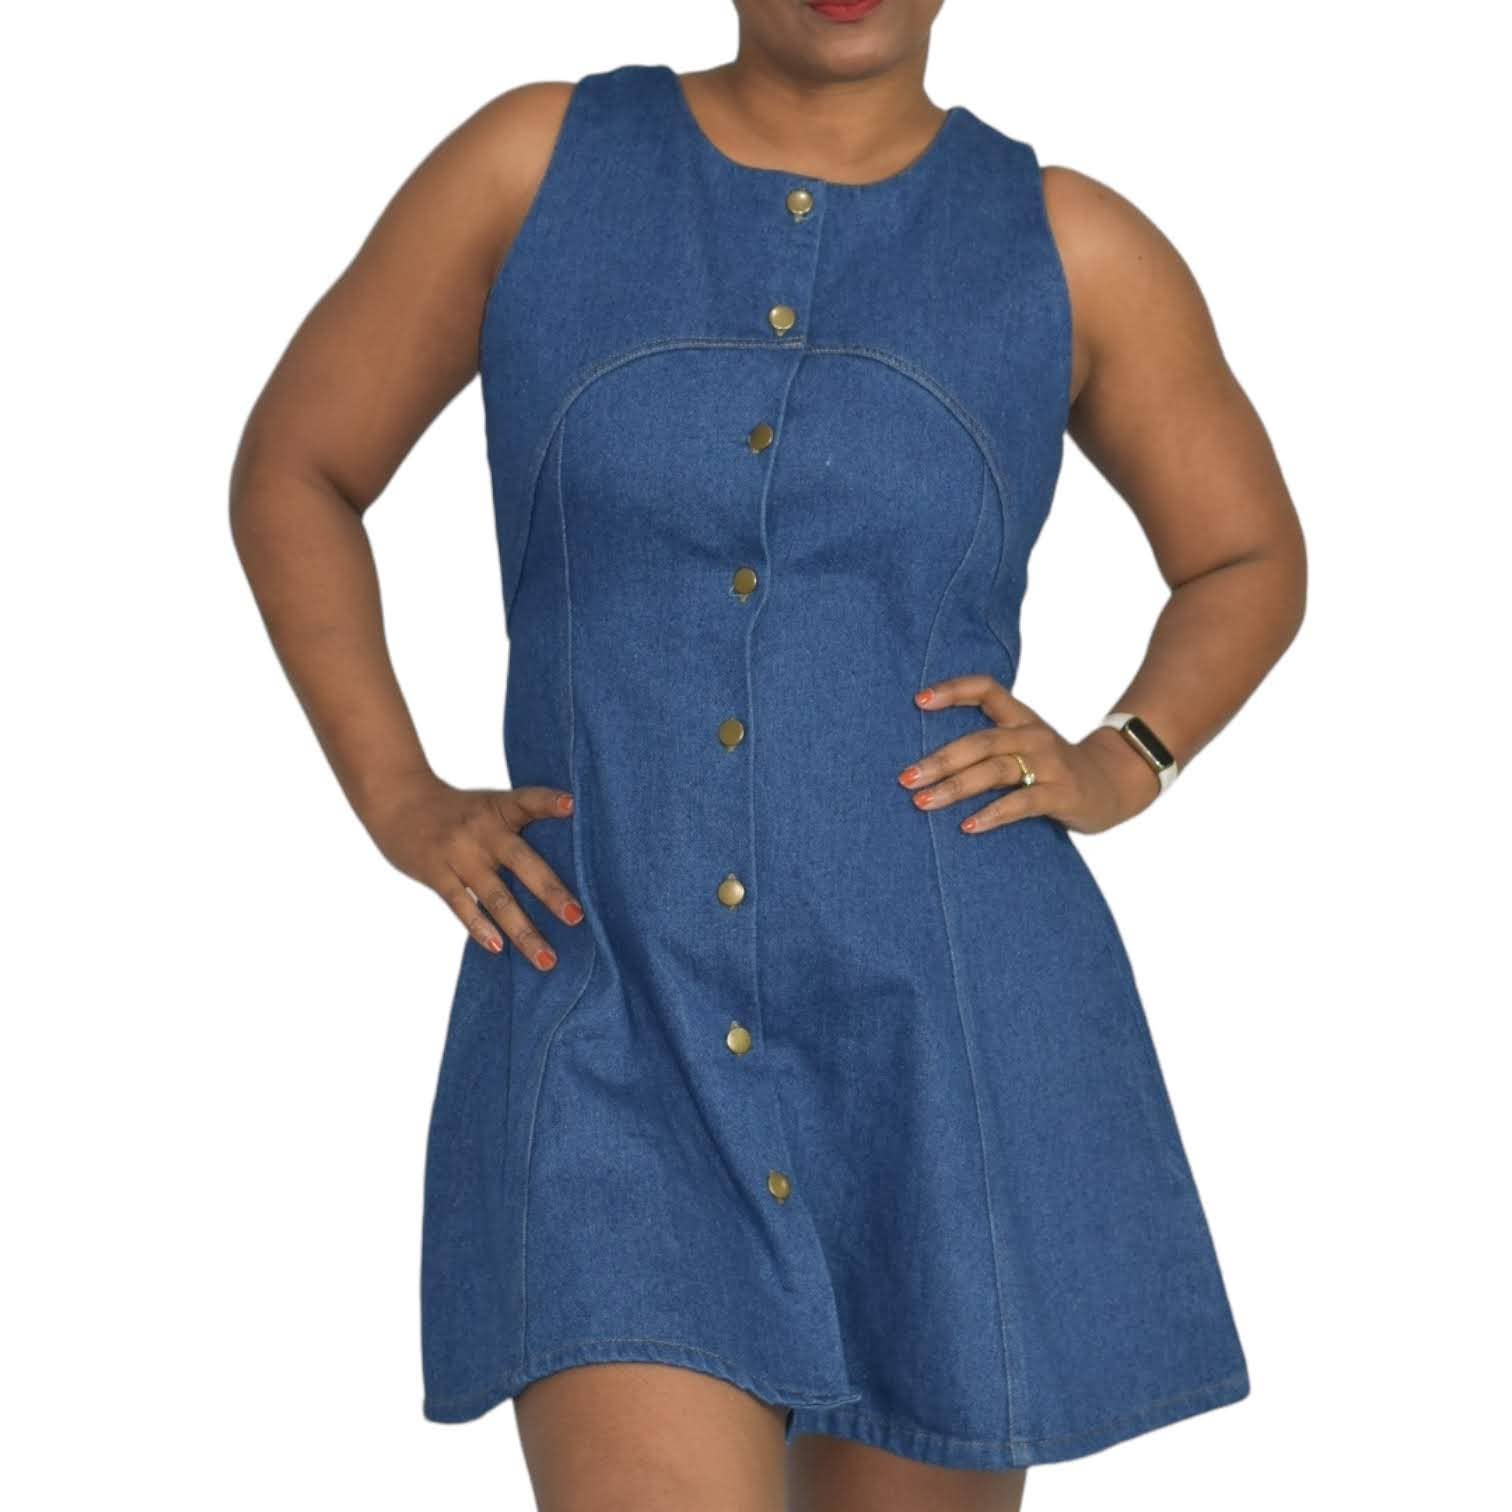 JOA Denim Mini Dress Blue Jean Sleeveless Button Front Jumper Cutout Size Medium